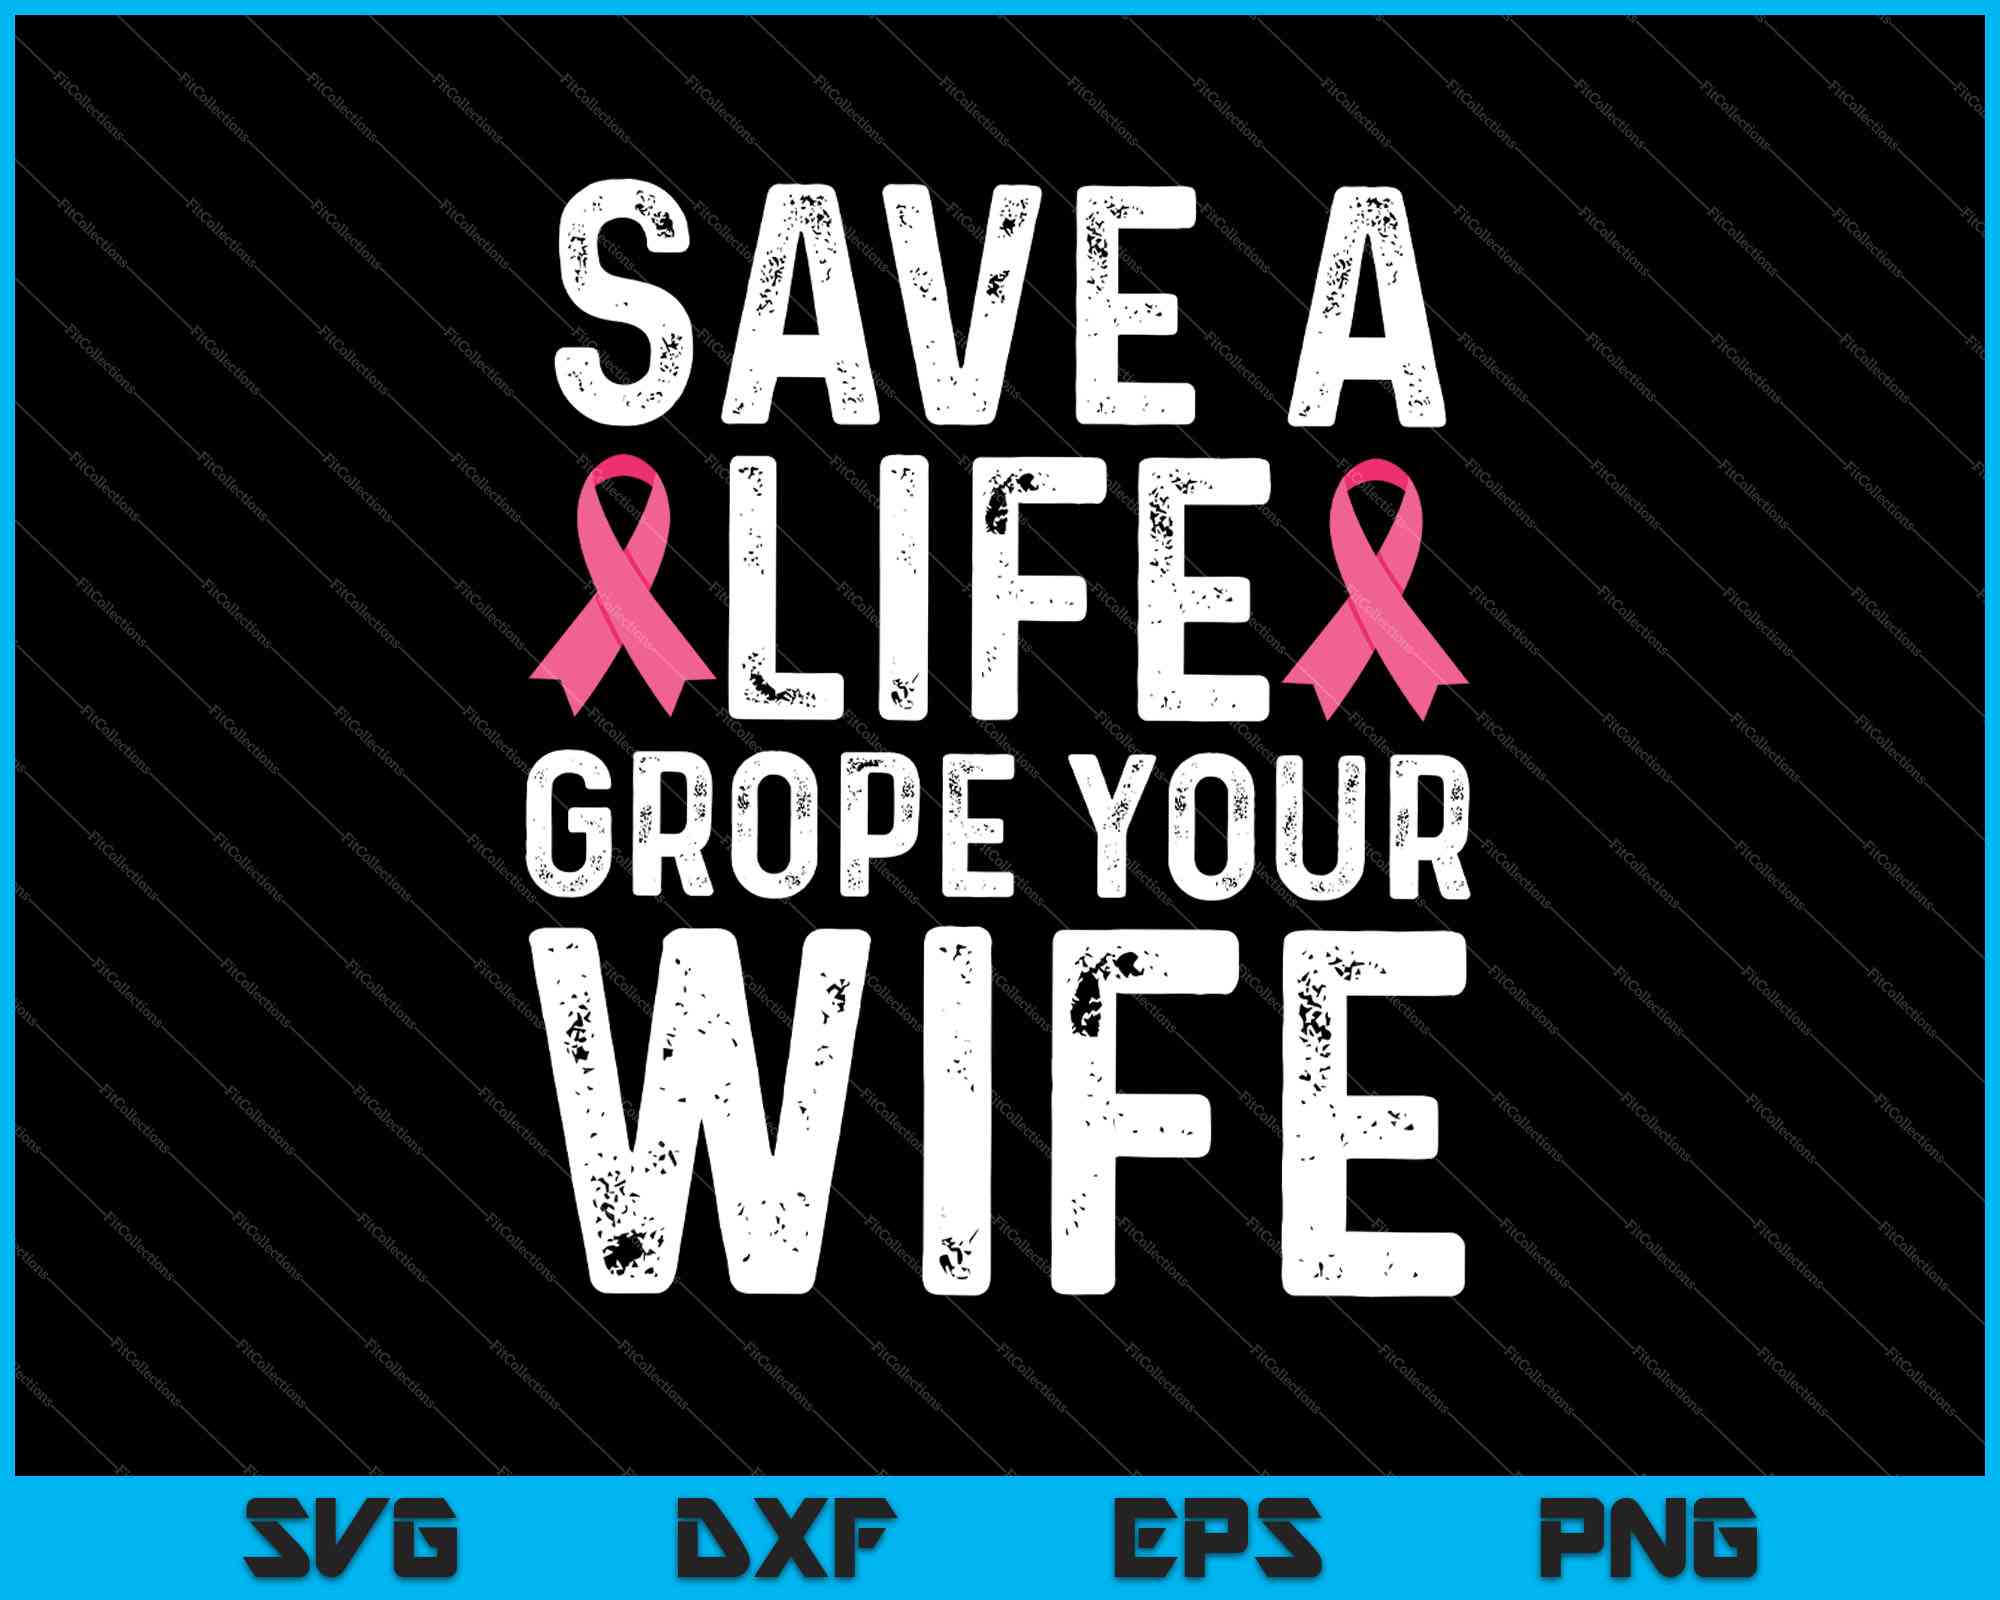 Cancer ribbon svg, Breast cancer, Pink ribbon svg, Awareness